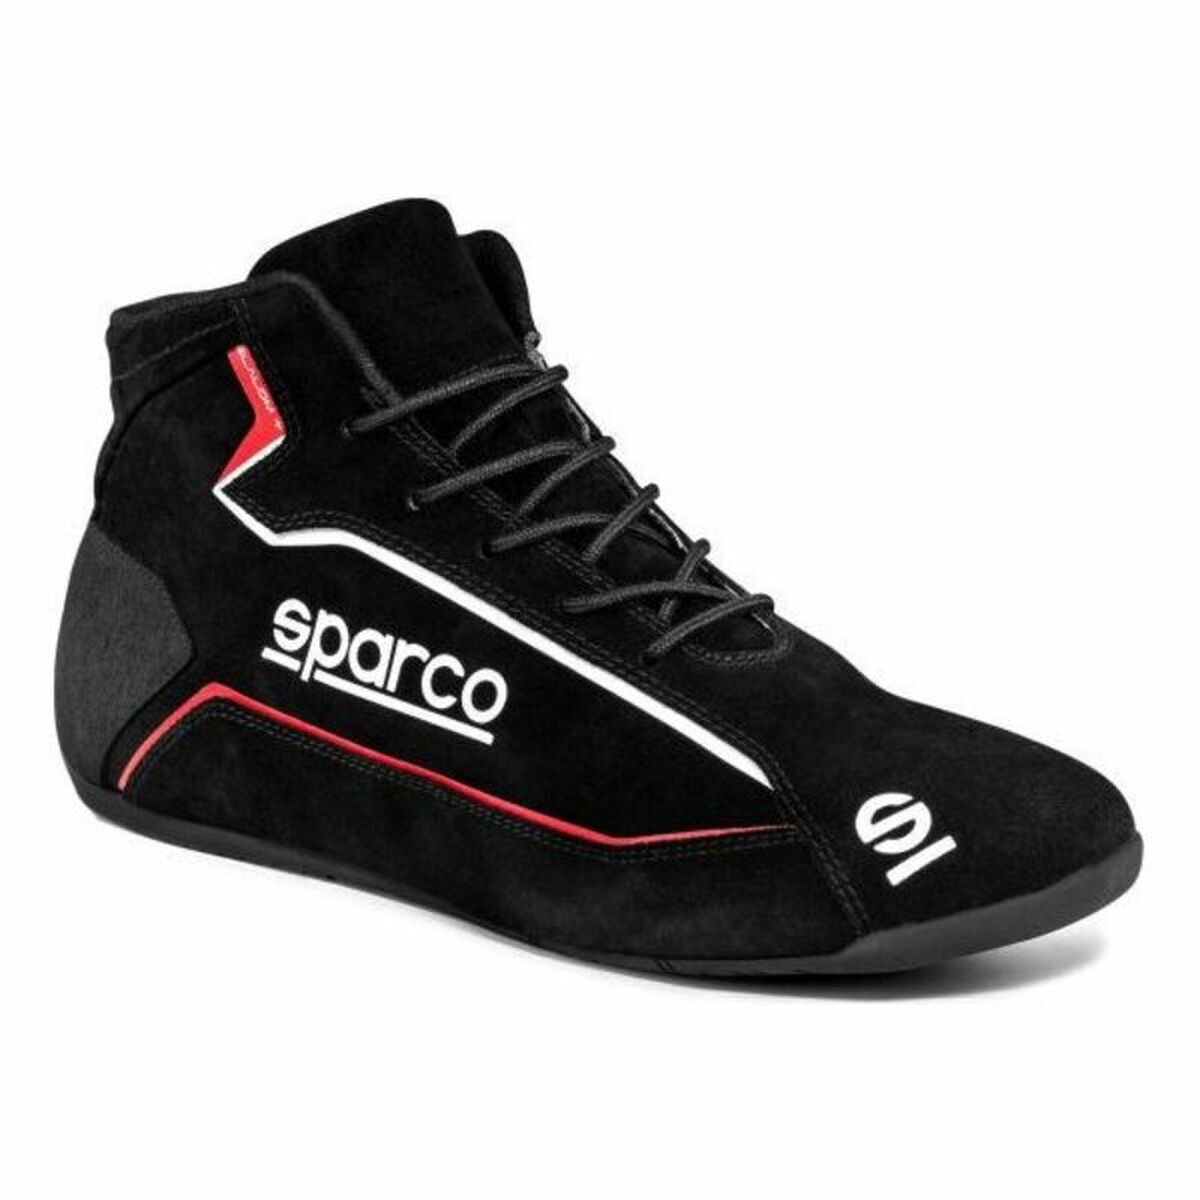 Racing boots Sparco Slalom 2020 Negru - Mărime 42